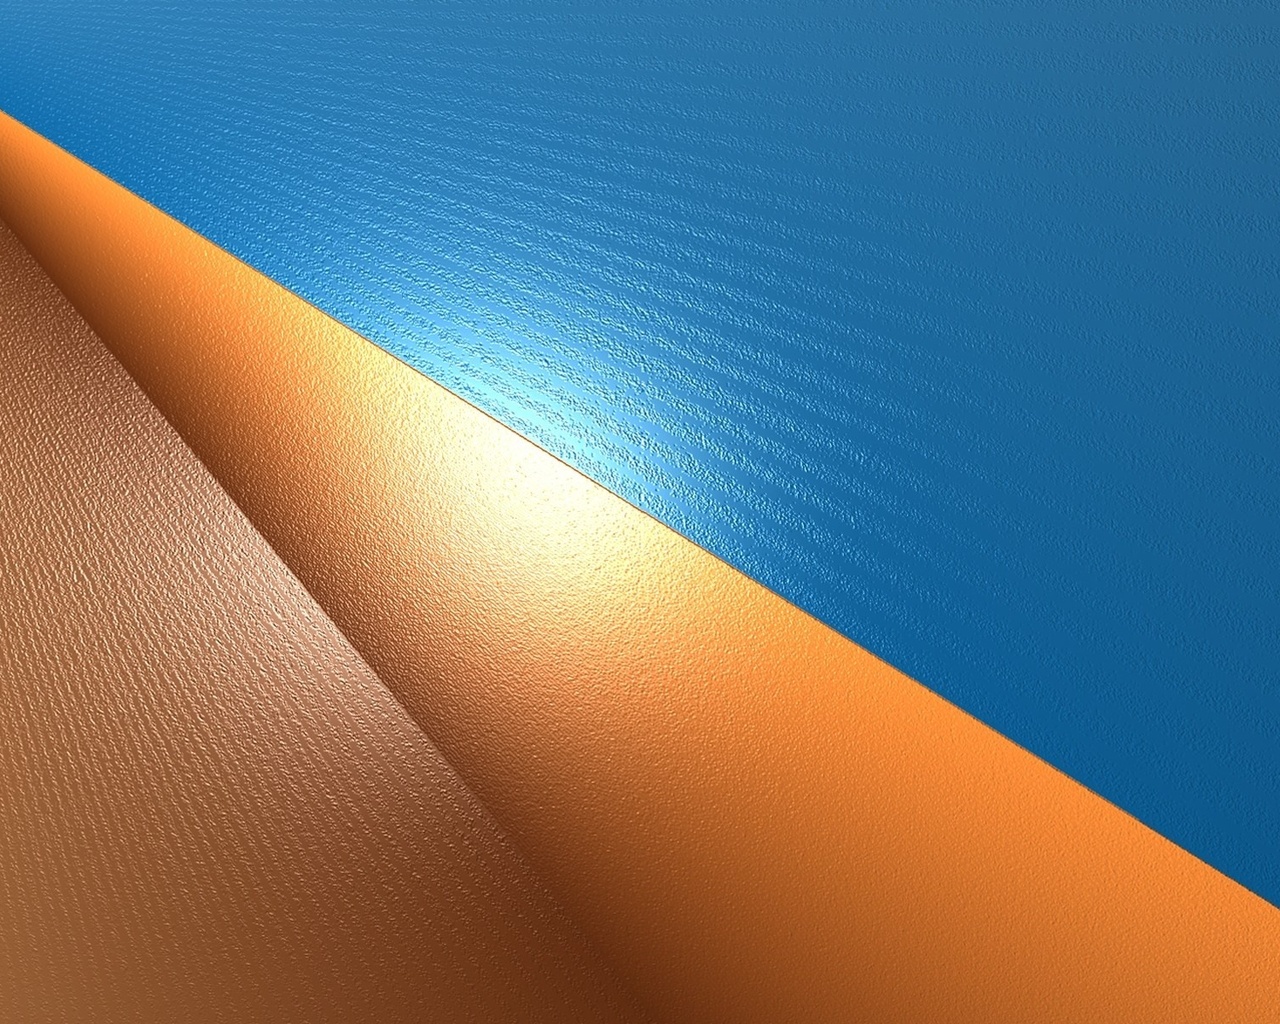 Blue orange abstract textures